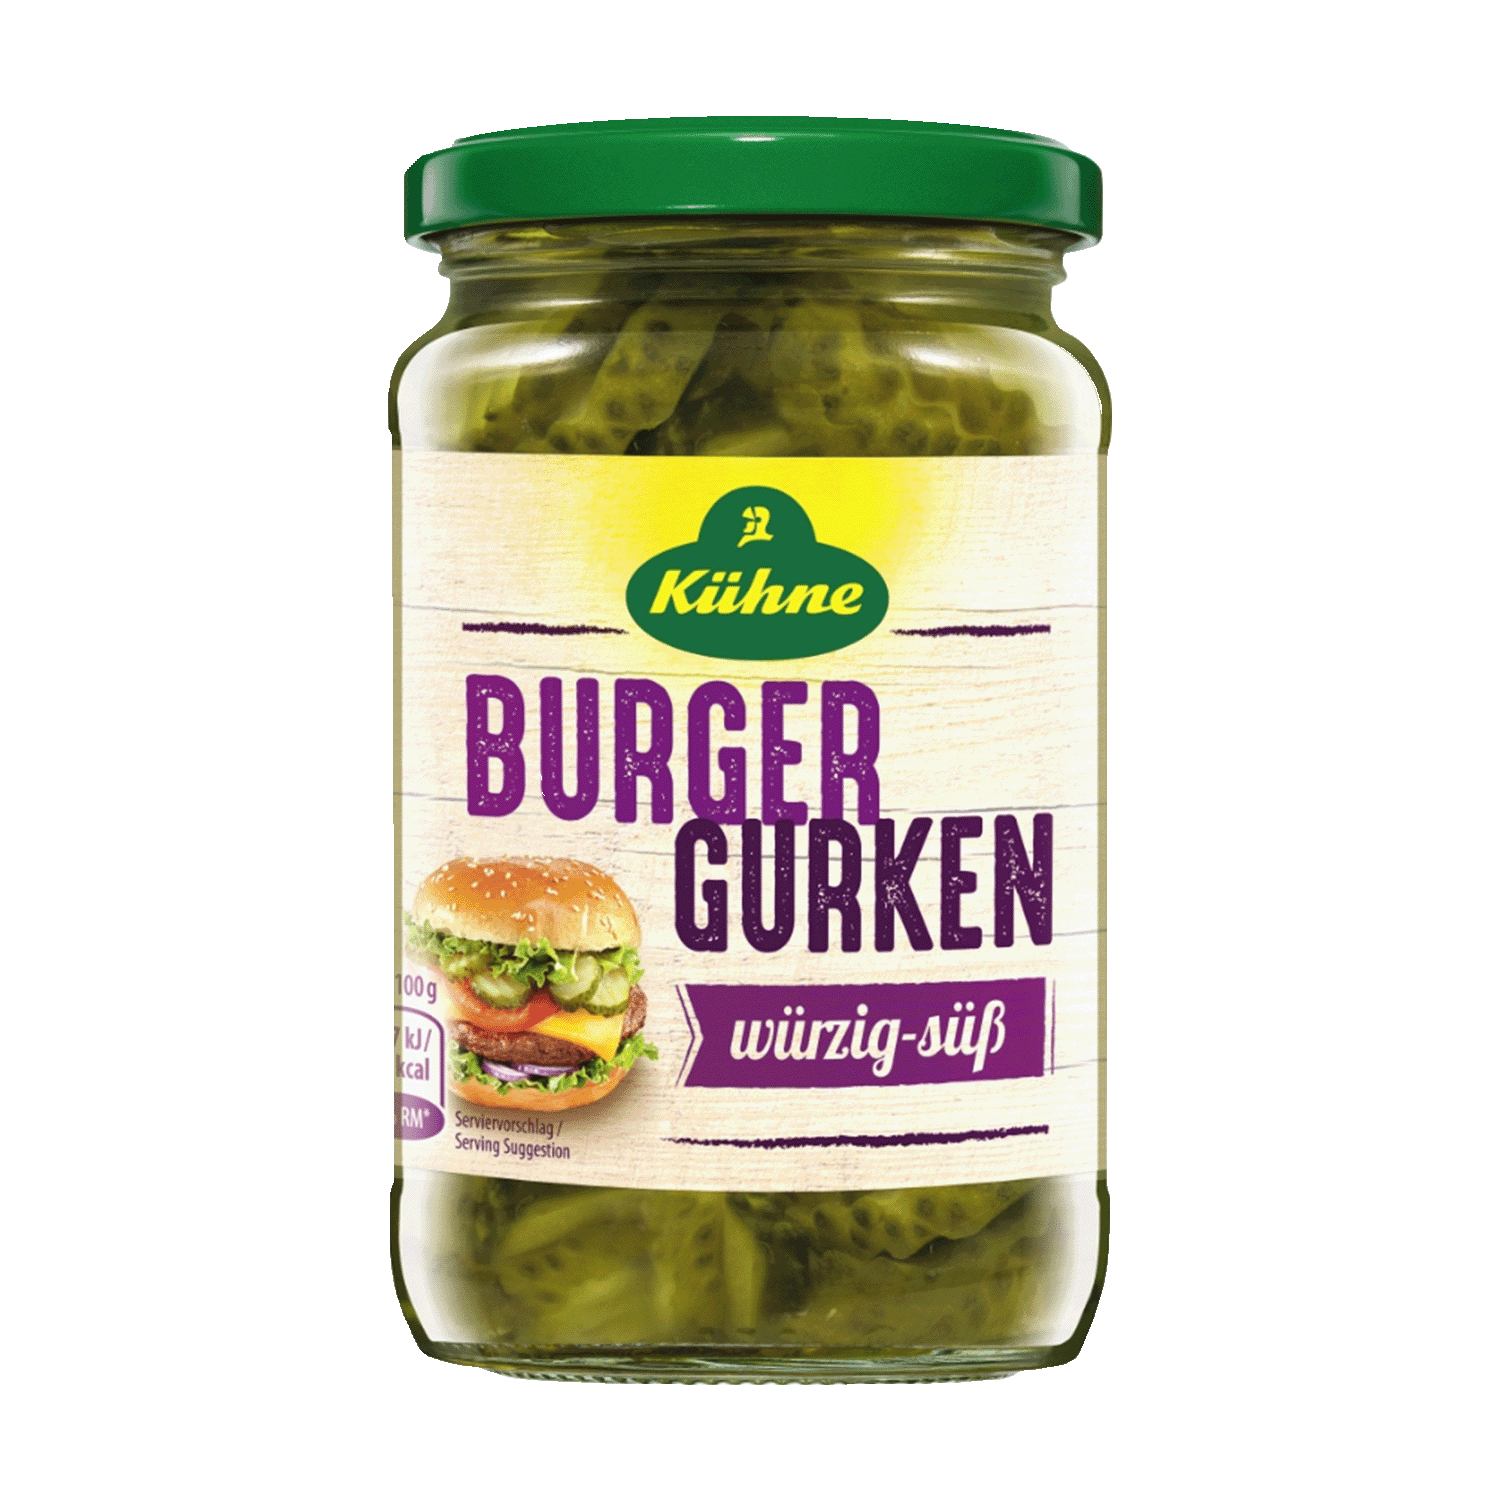 Burger Gurken spicy-sweet, 370ml